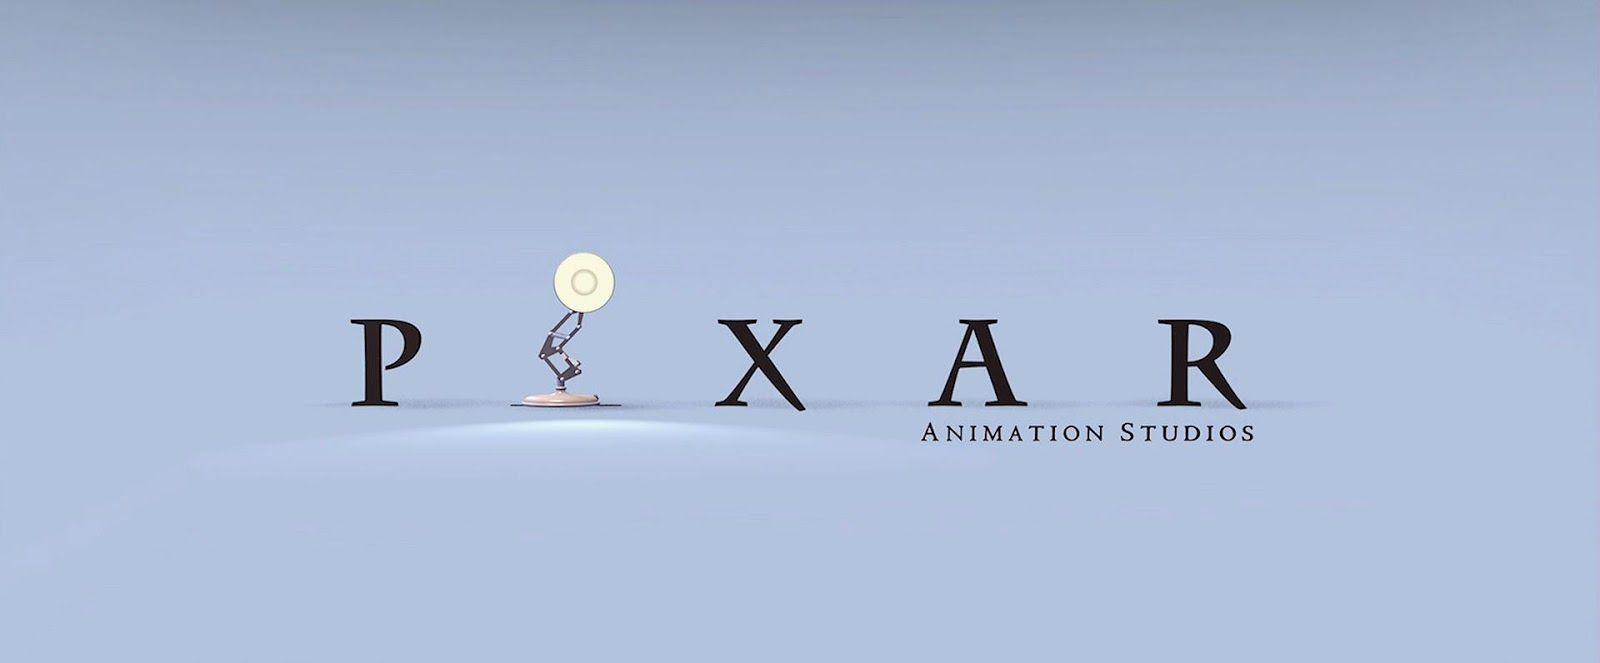 Disney Pixar Animation Studios Logo - Pixar #AnimationStudios #Lamp #Logo Disney•Pixar #Animation #Studios